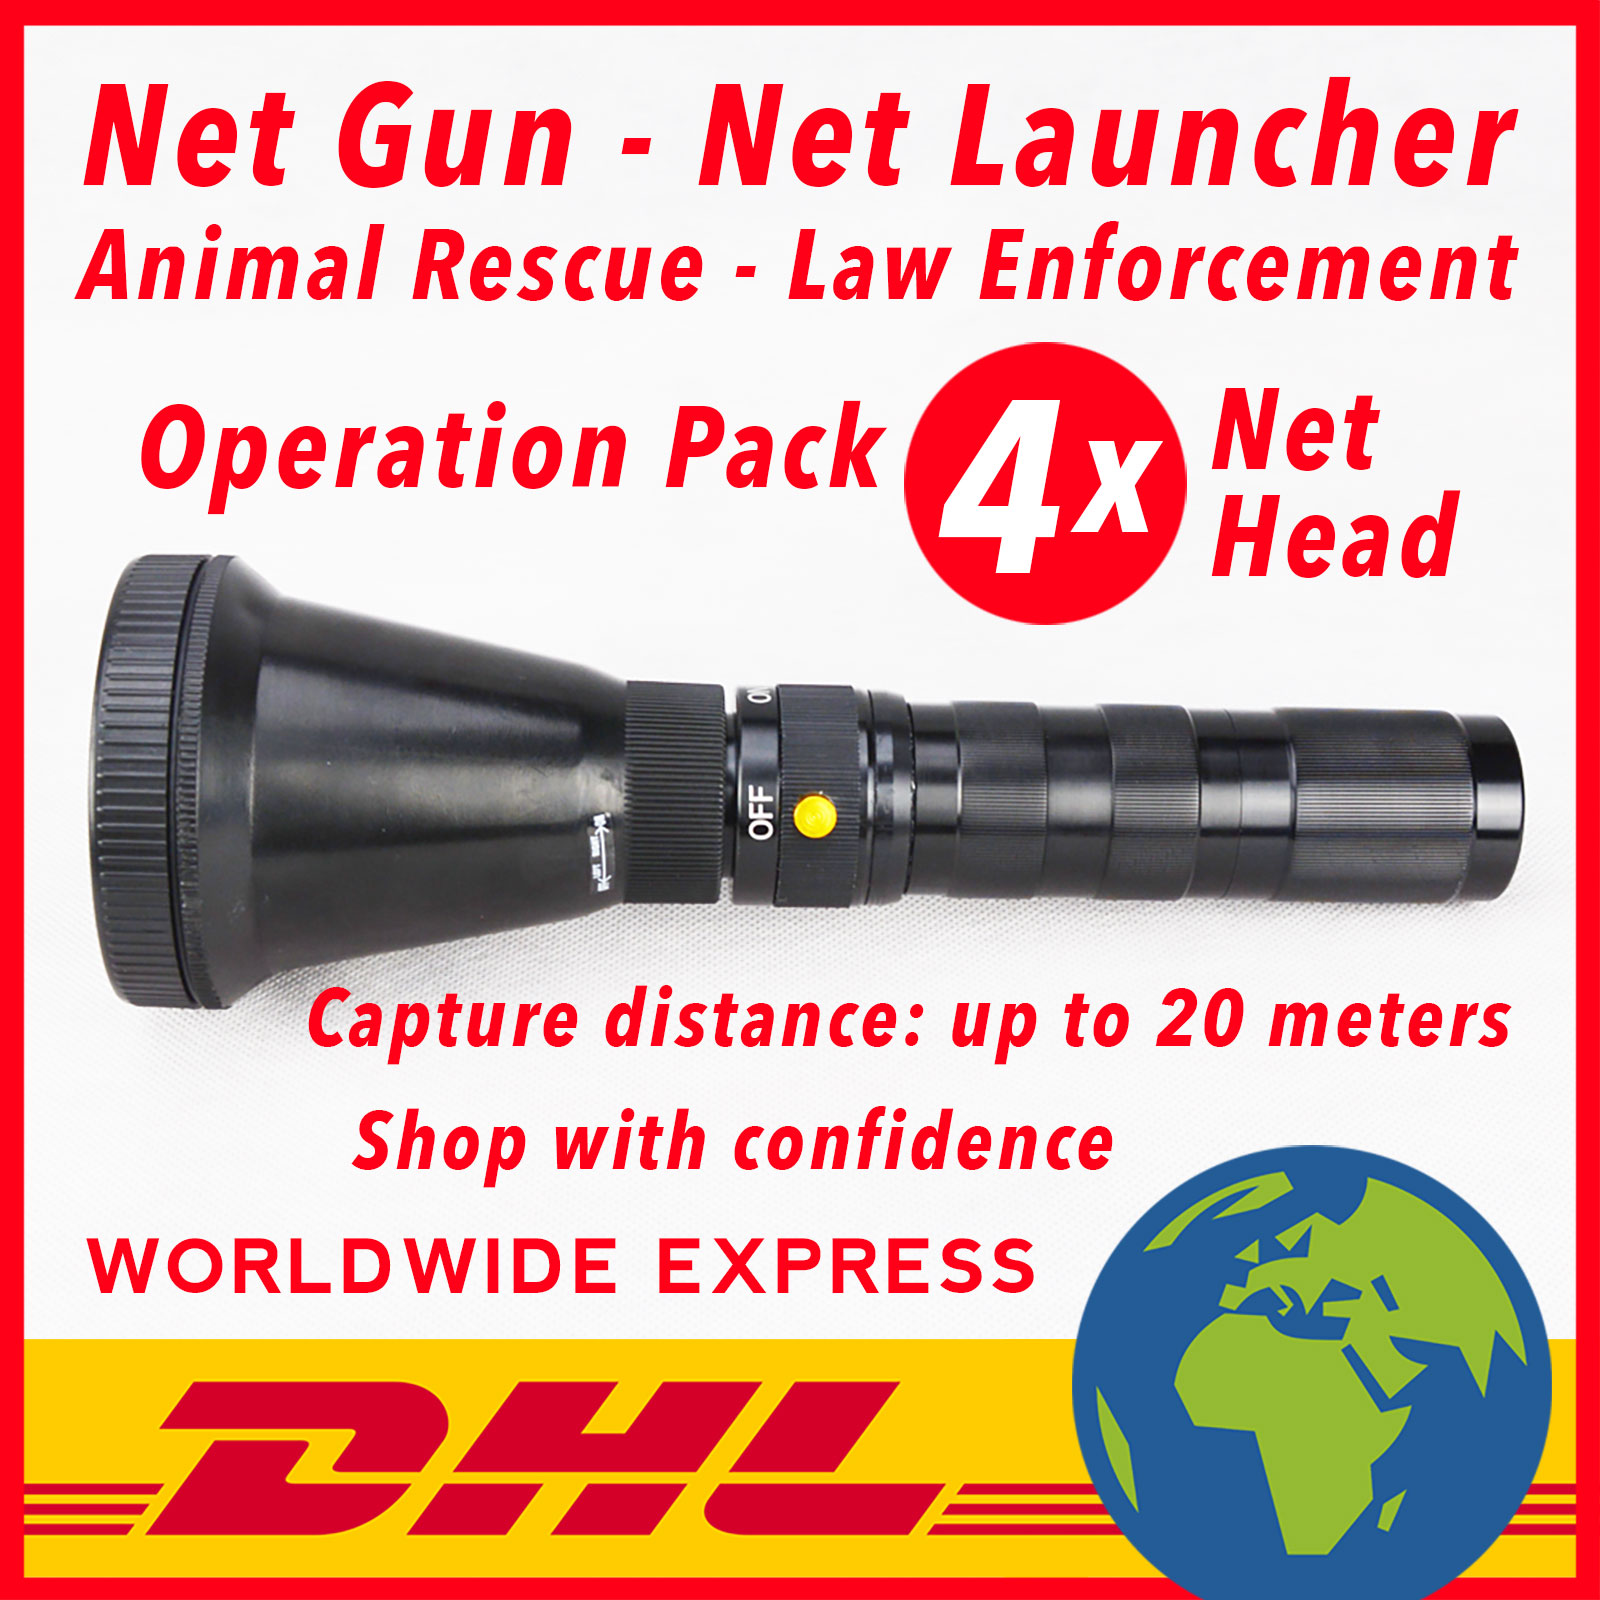 Net Gun Australia - AUD719 Free DHL Delivery - Net, CO2 & Case